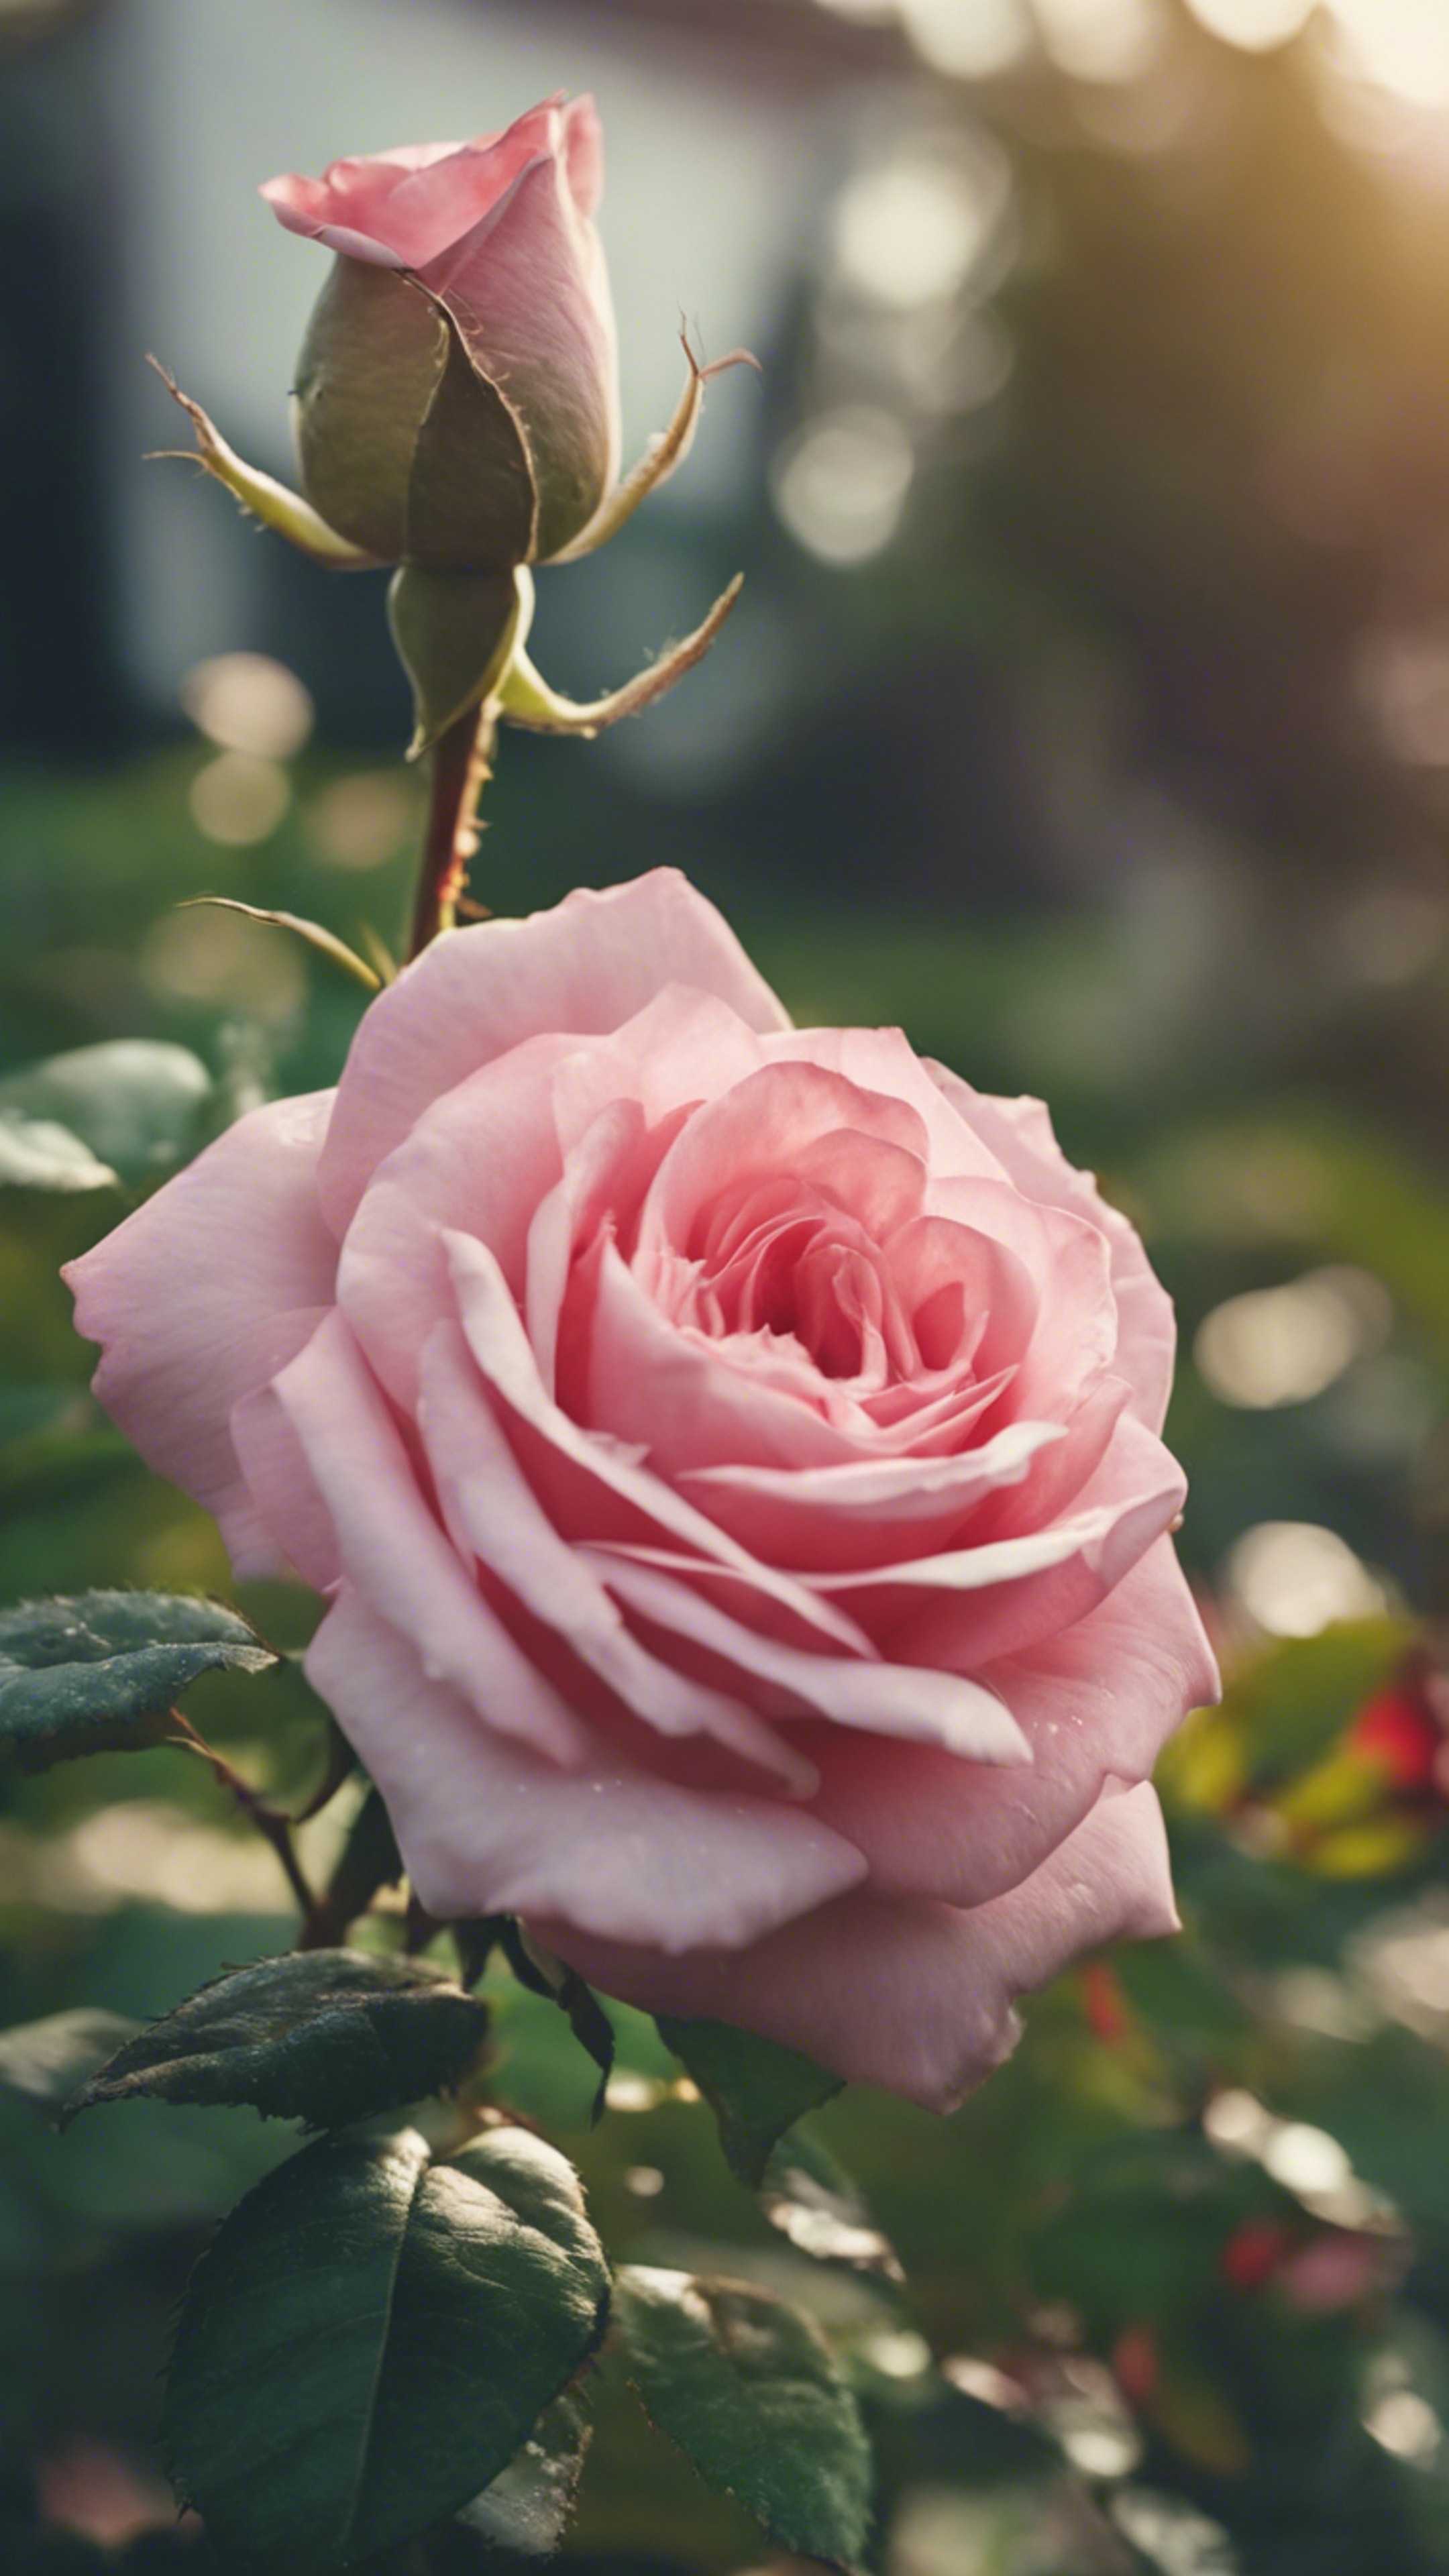 A beautiful pink heart-shaped rose blooming in a lush green garden. duvar kağıdı[602cae484ee541a8ab0b]